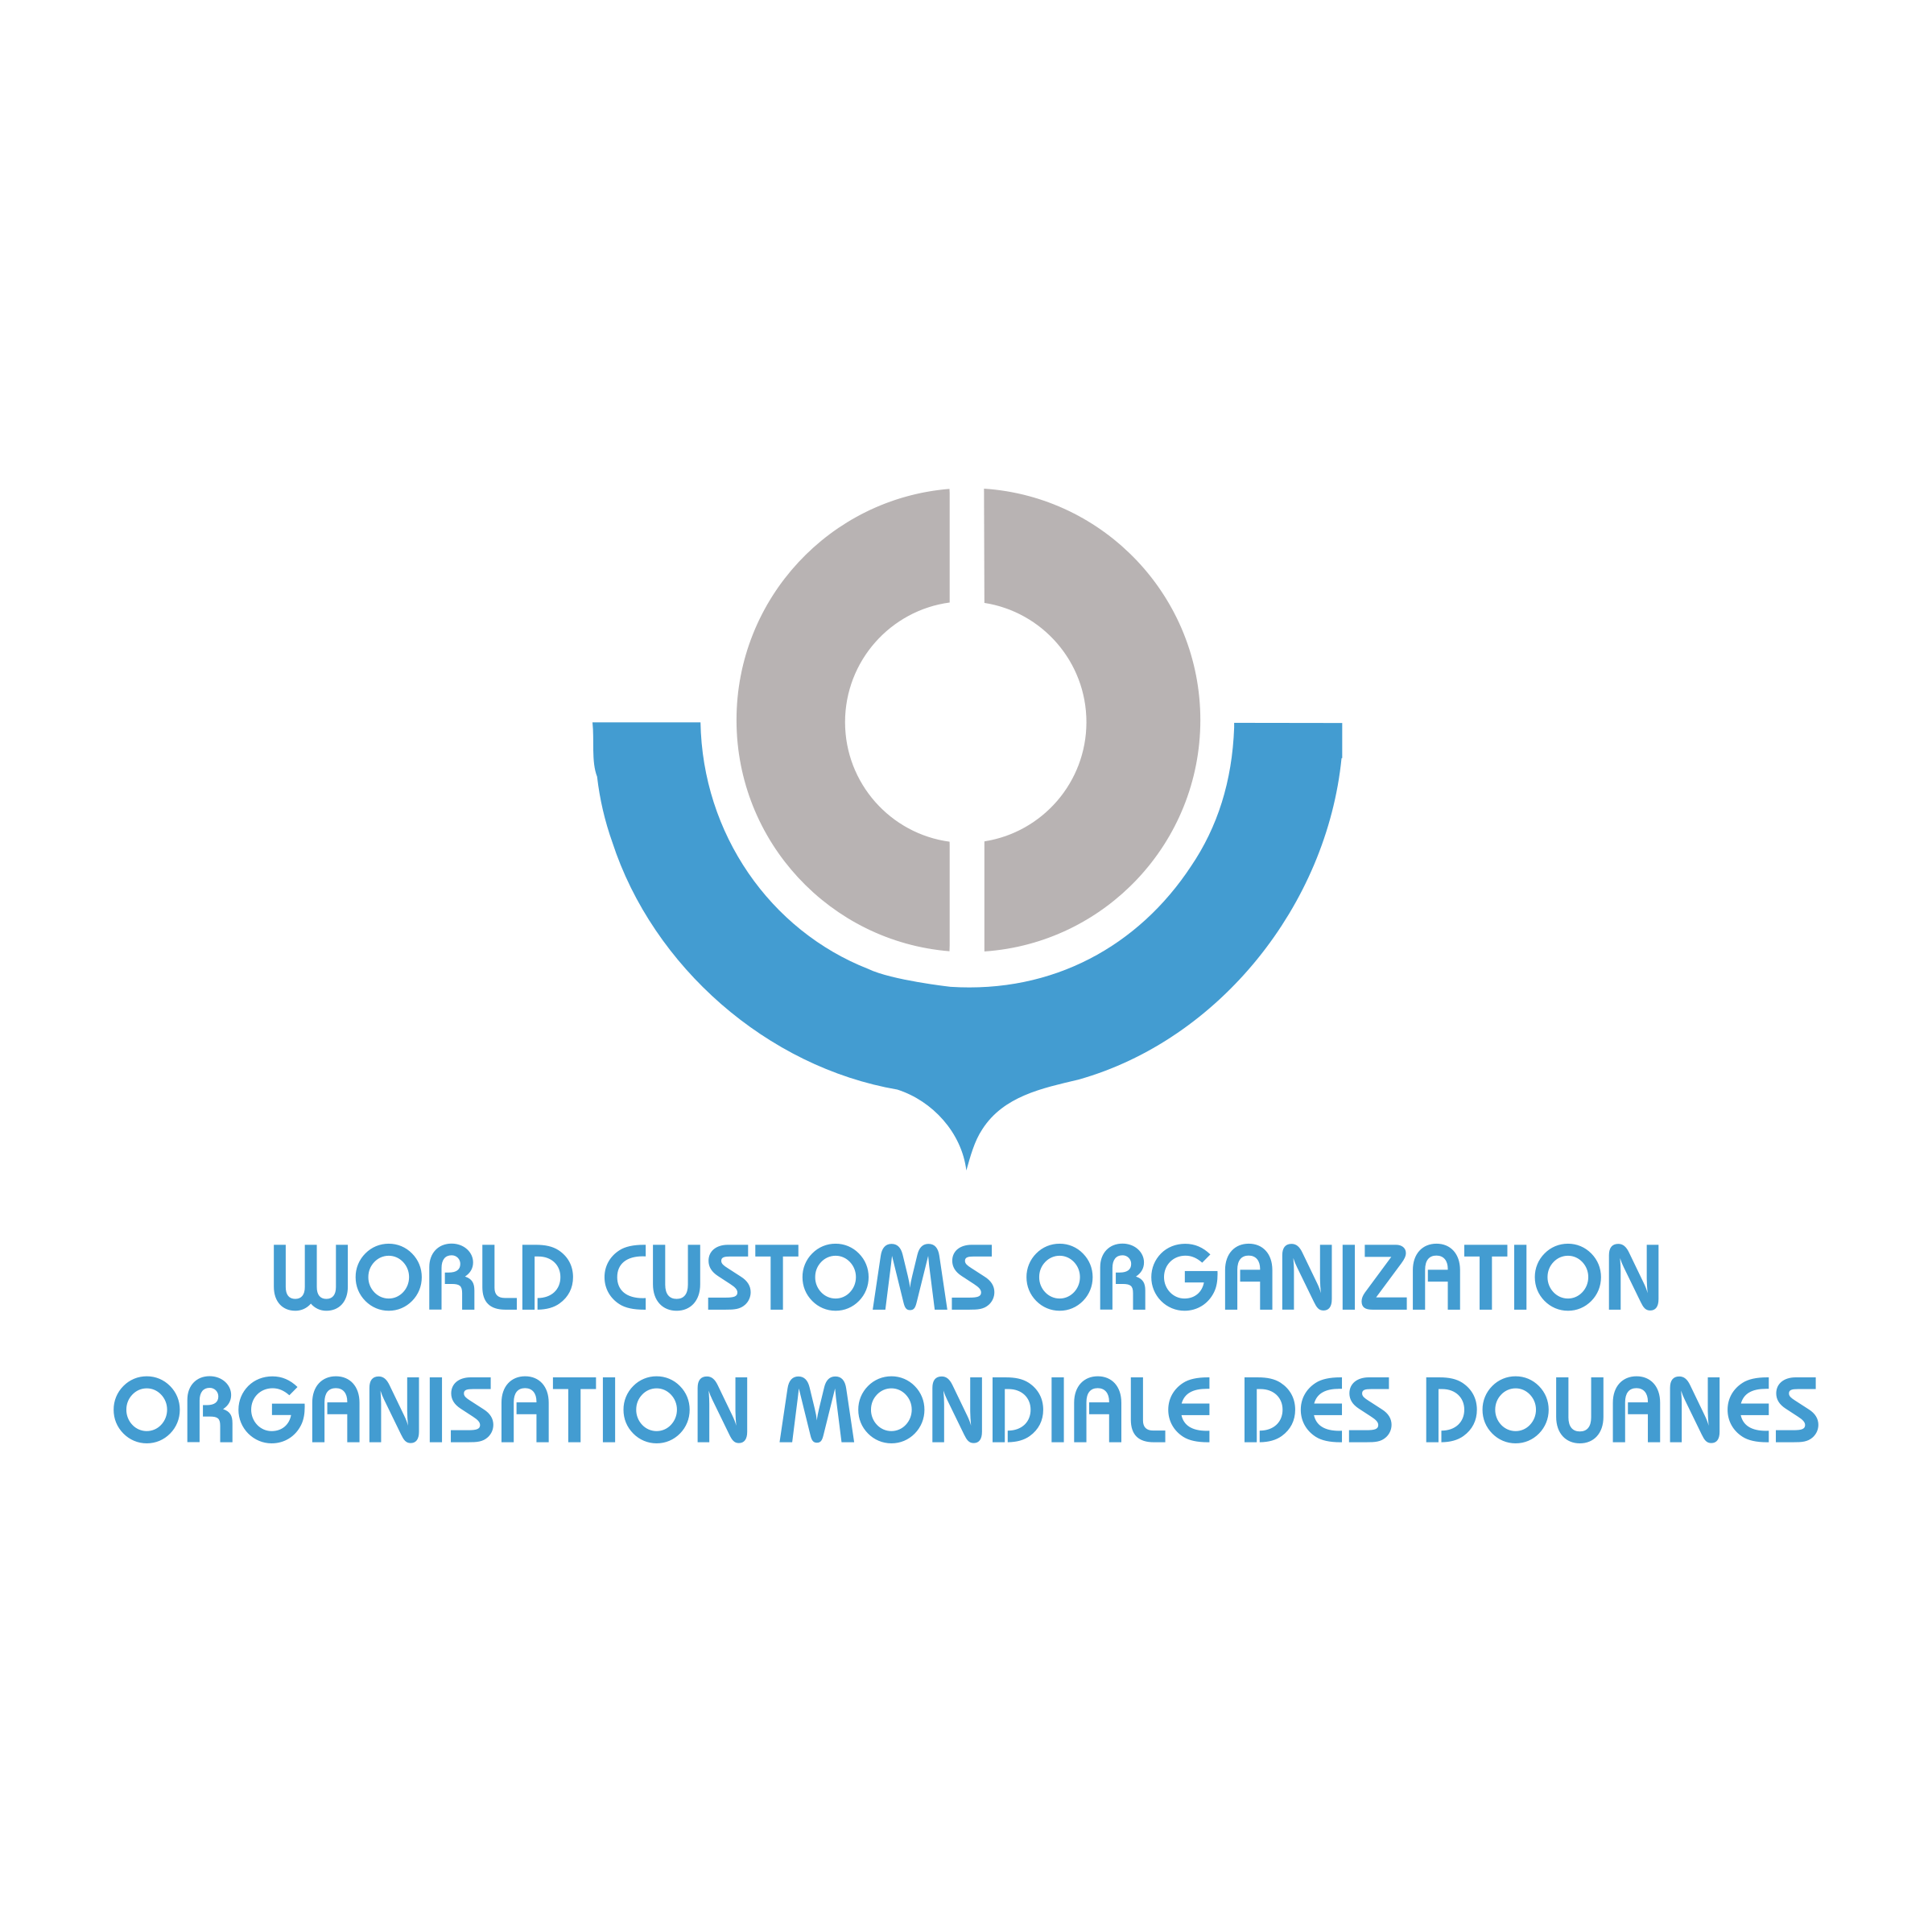 World Organization Logo - World Customs Organization Logo PNG Transparent & SVG Vector ...